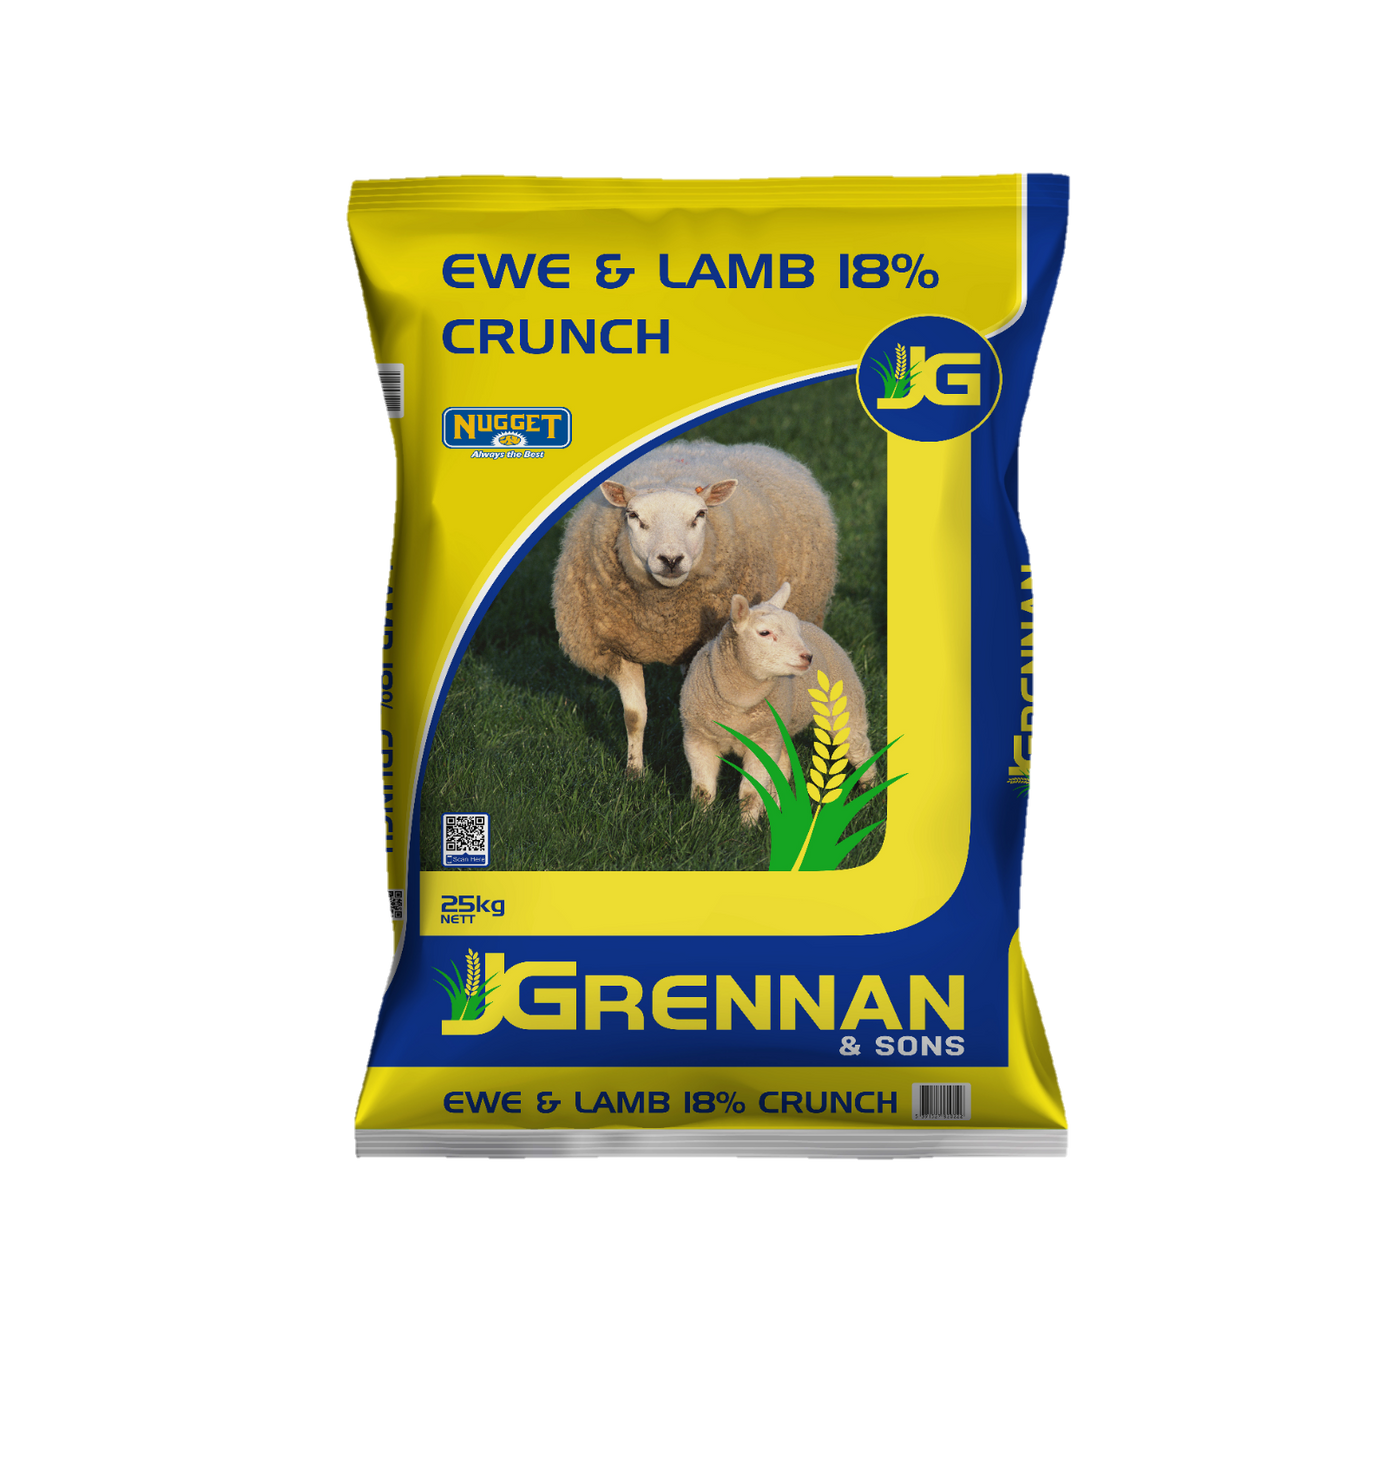 18% Ewe & Lamb Crunch